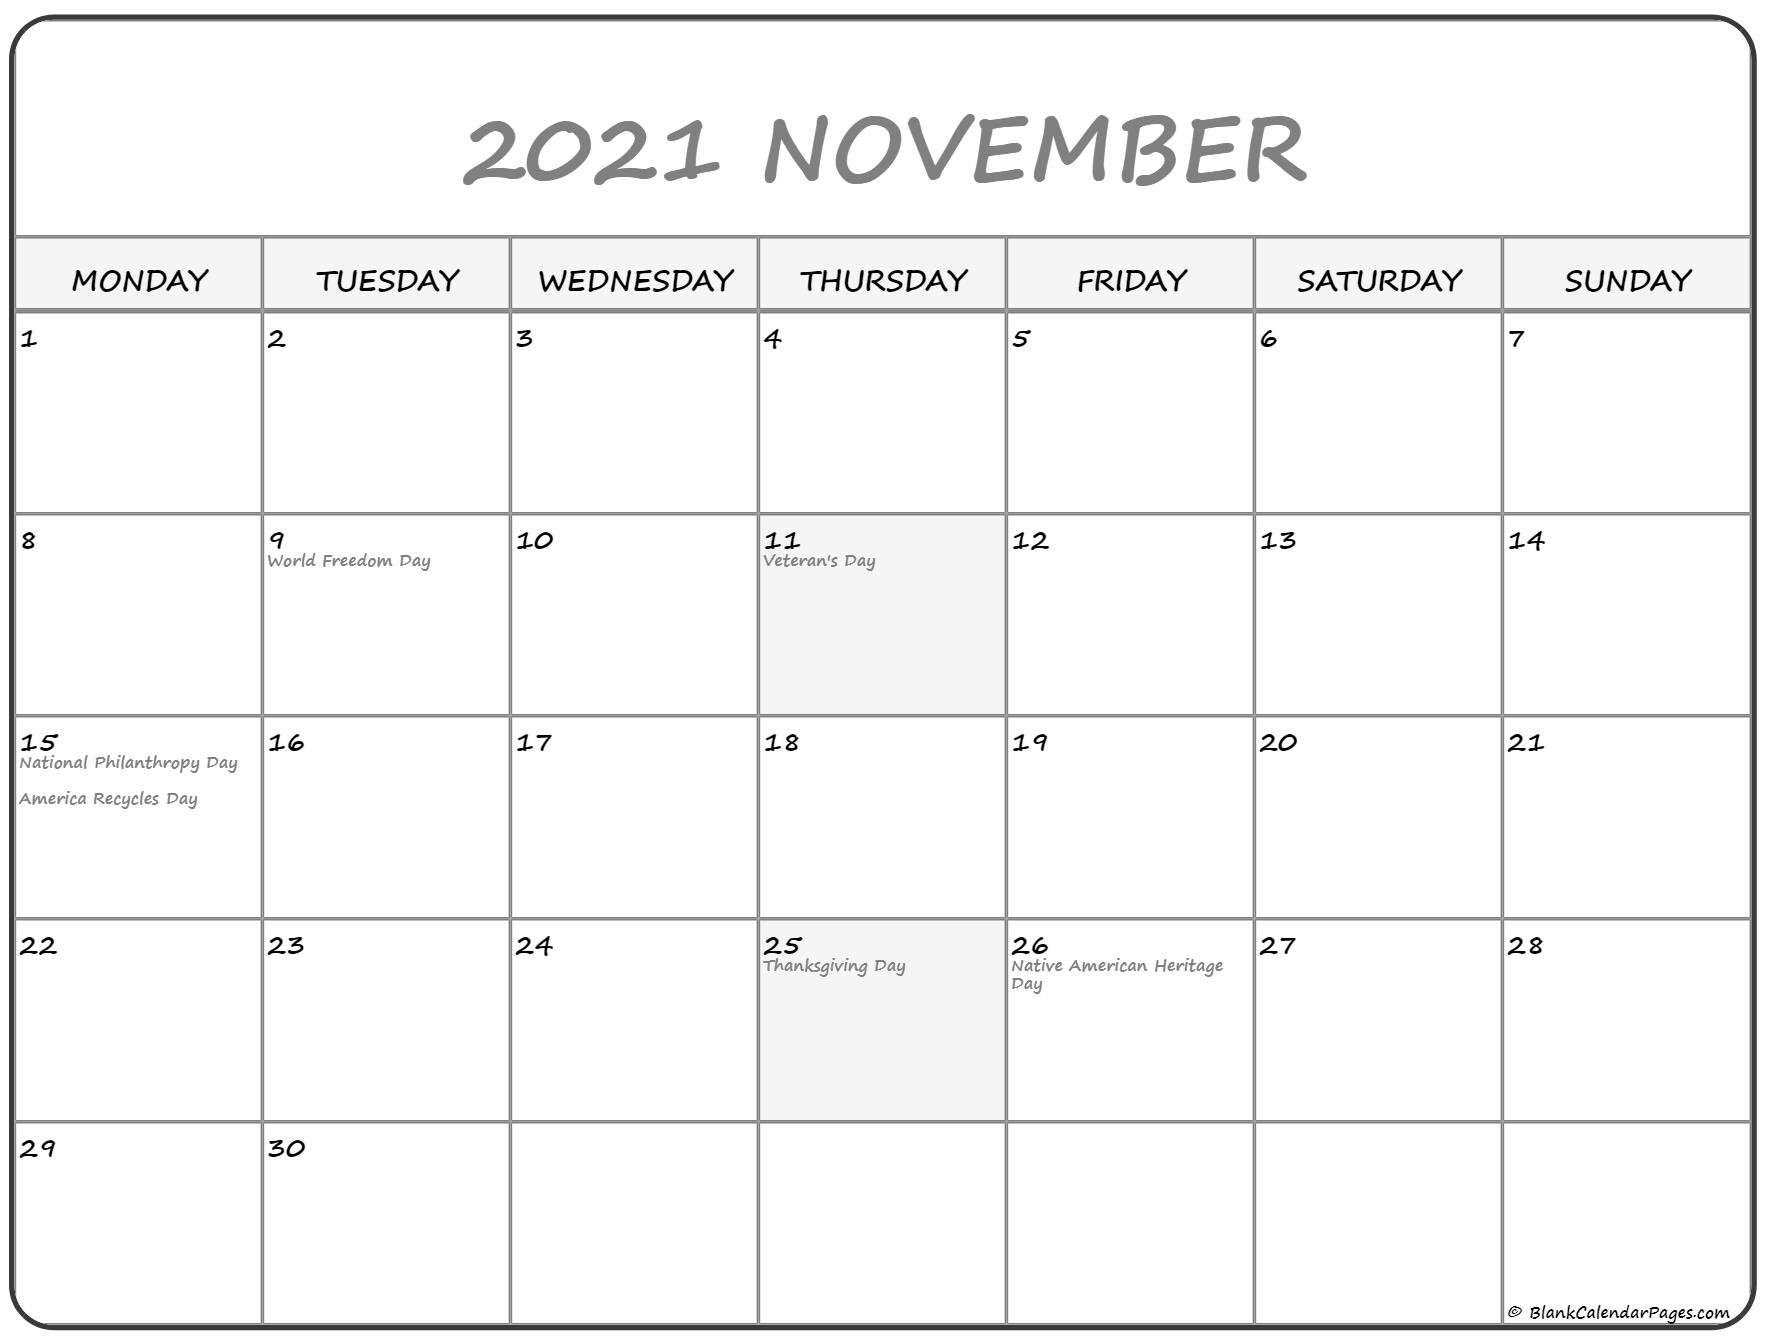 November 2021 Monday Calendar Monday To Sunday - Calendar Template 2021 November 2021 Calendar Kalnirnay